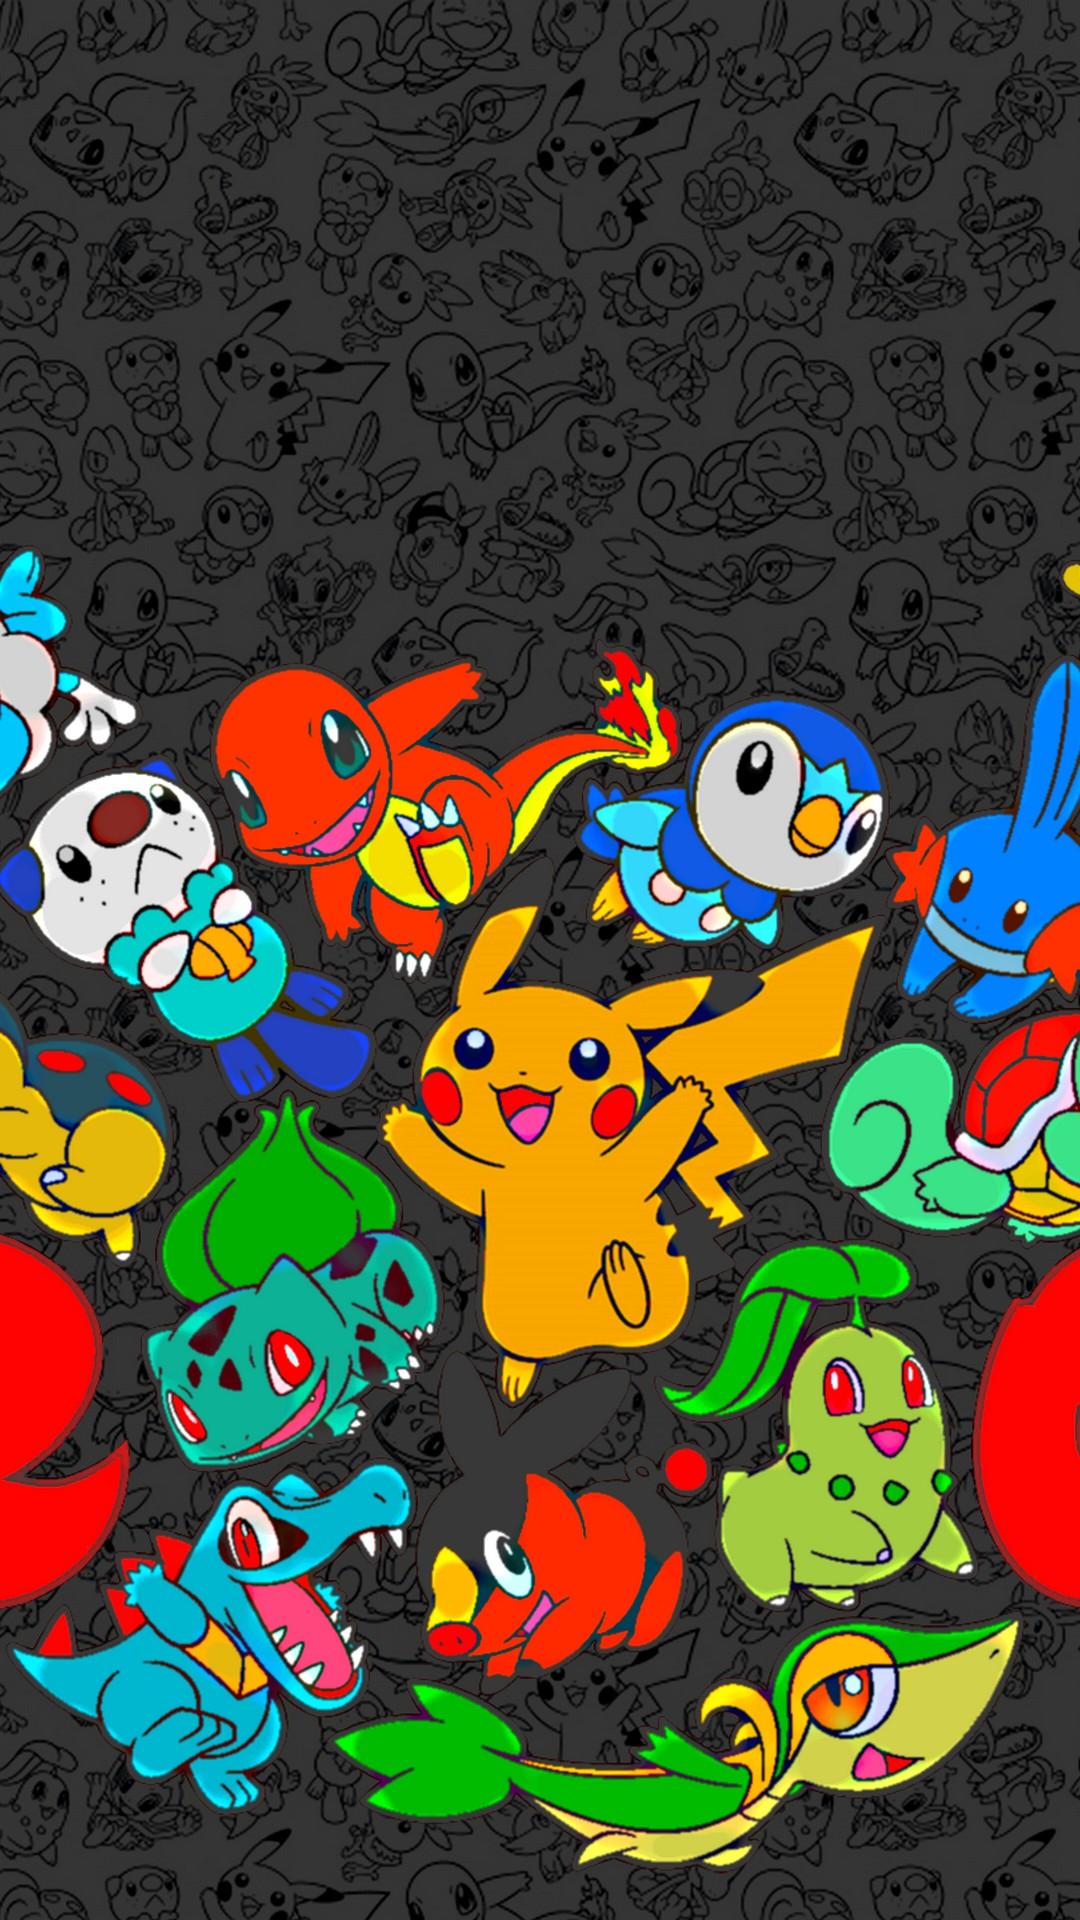 Wallpapers para celular do Pokémon